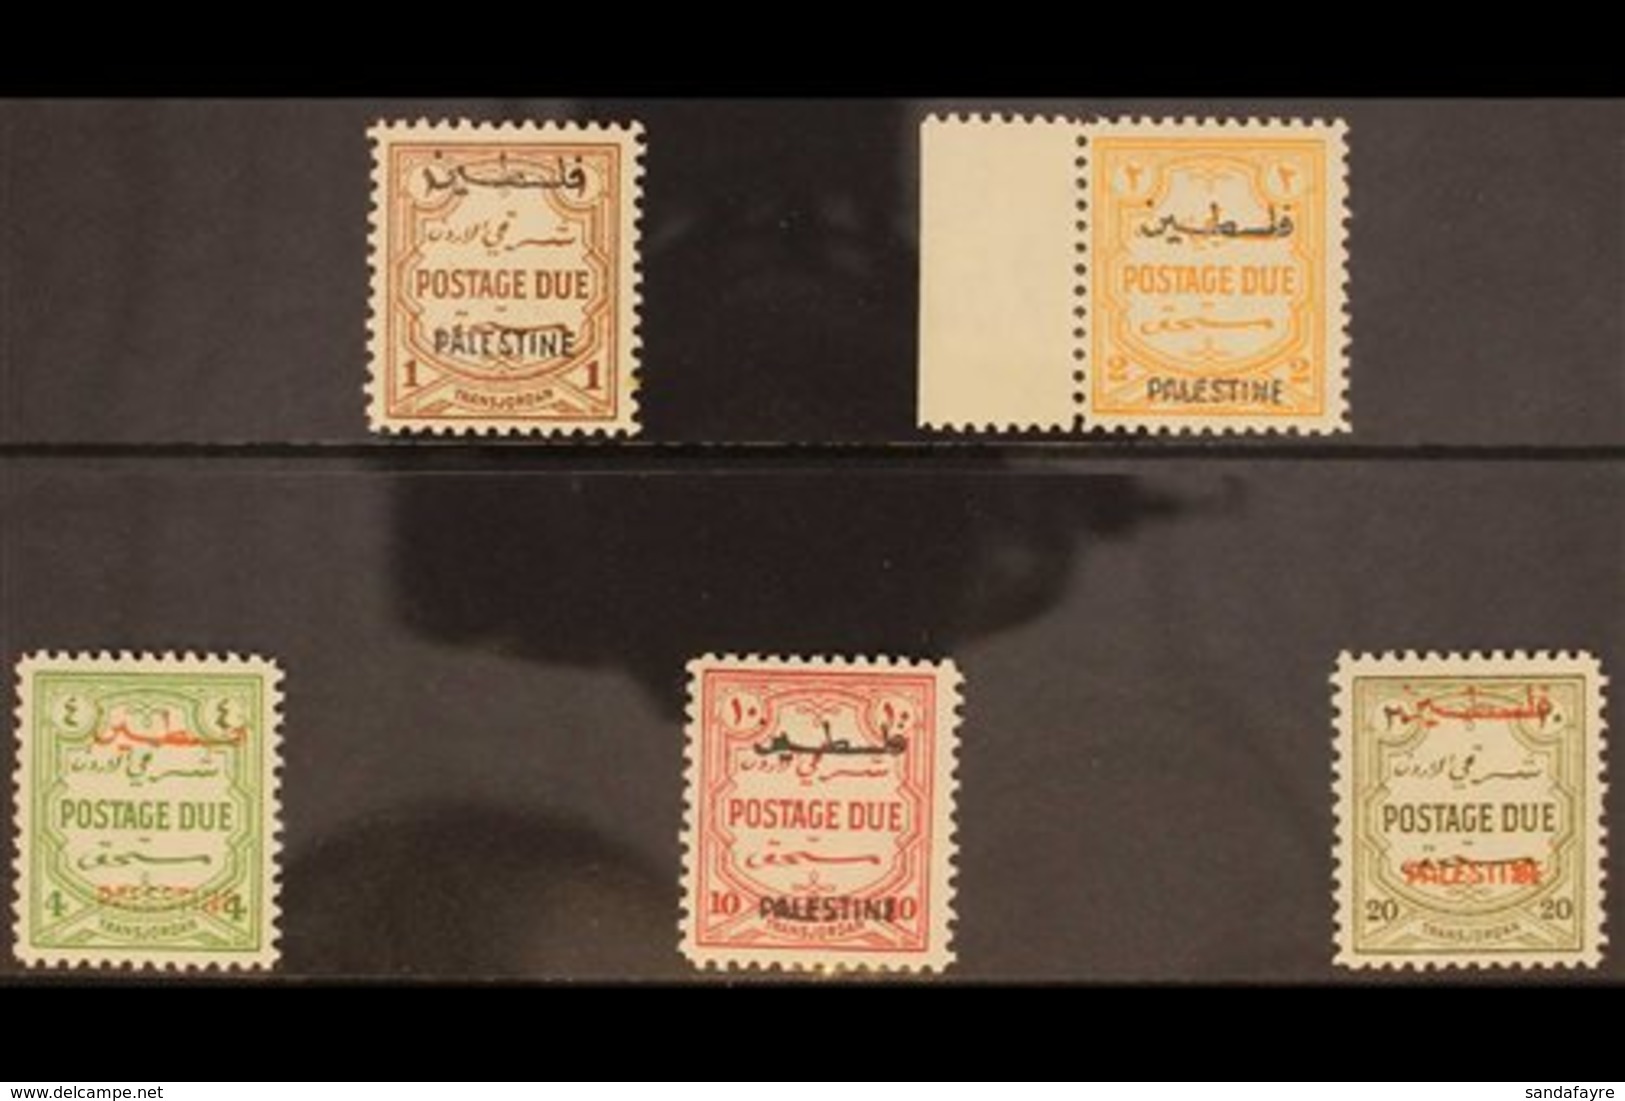 OCCUPATION OF PALESTINE POSTAGE DUE. 1948 Multi Script Wmk - Perf 12 Set, SG PD 25/29, Fine Mint (5 Stamps) For More Ima - Jordan